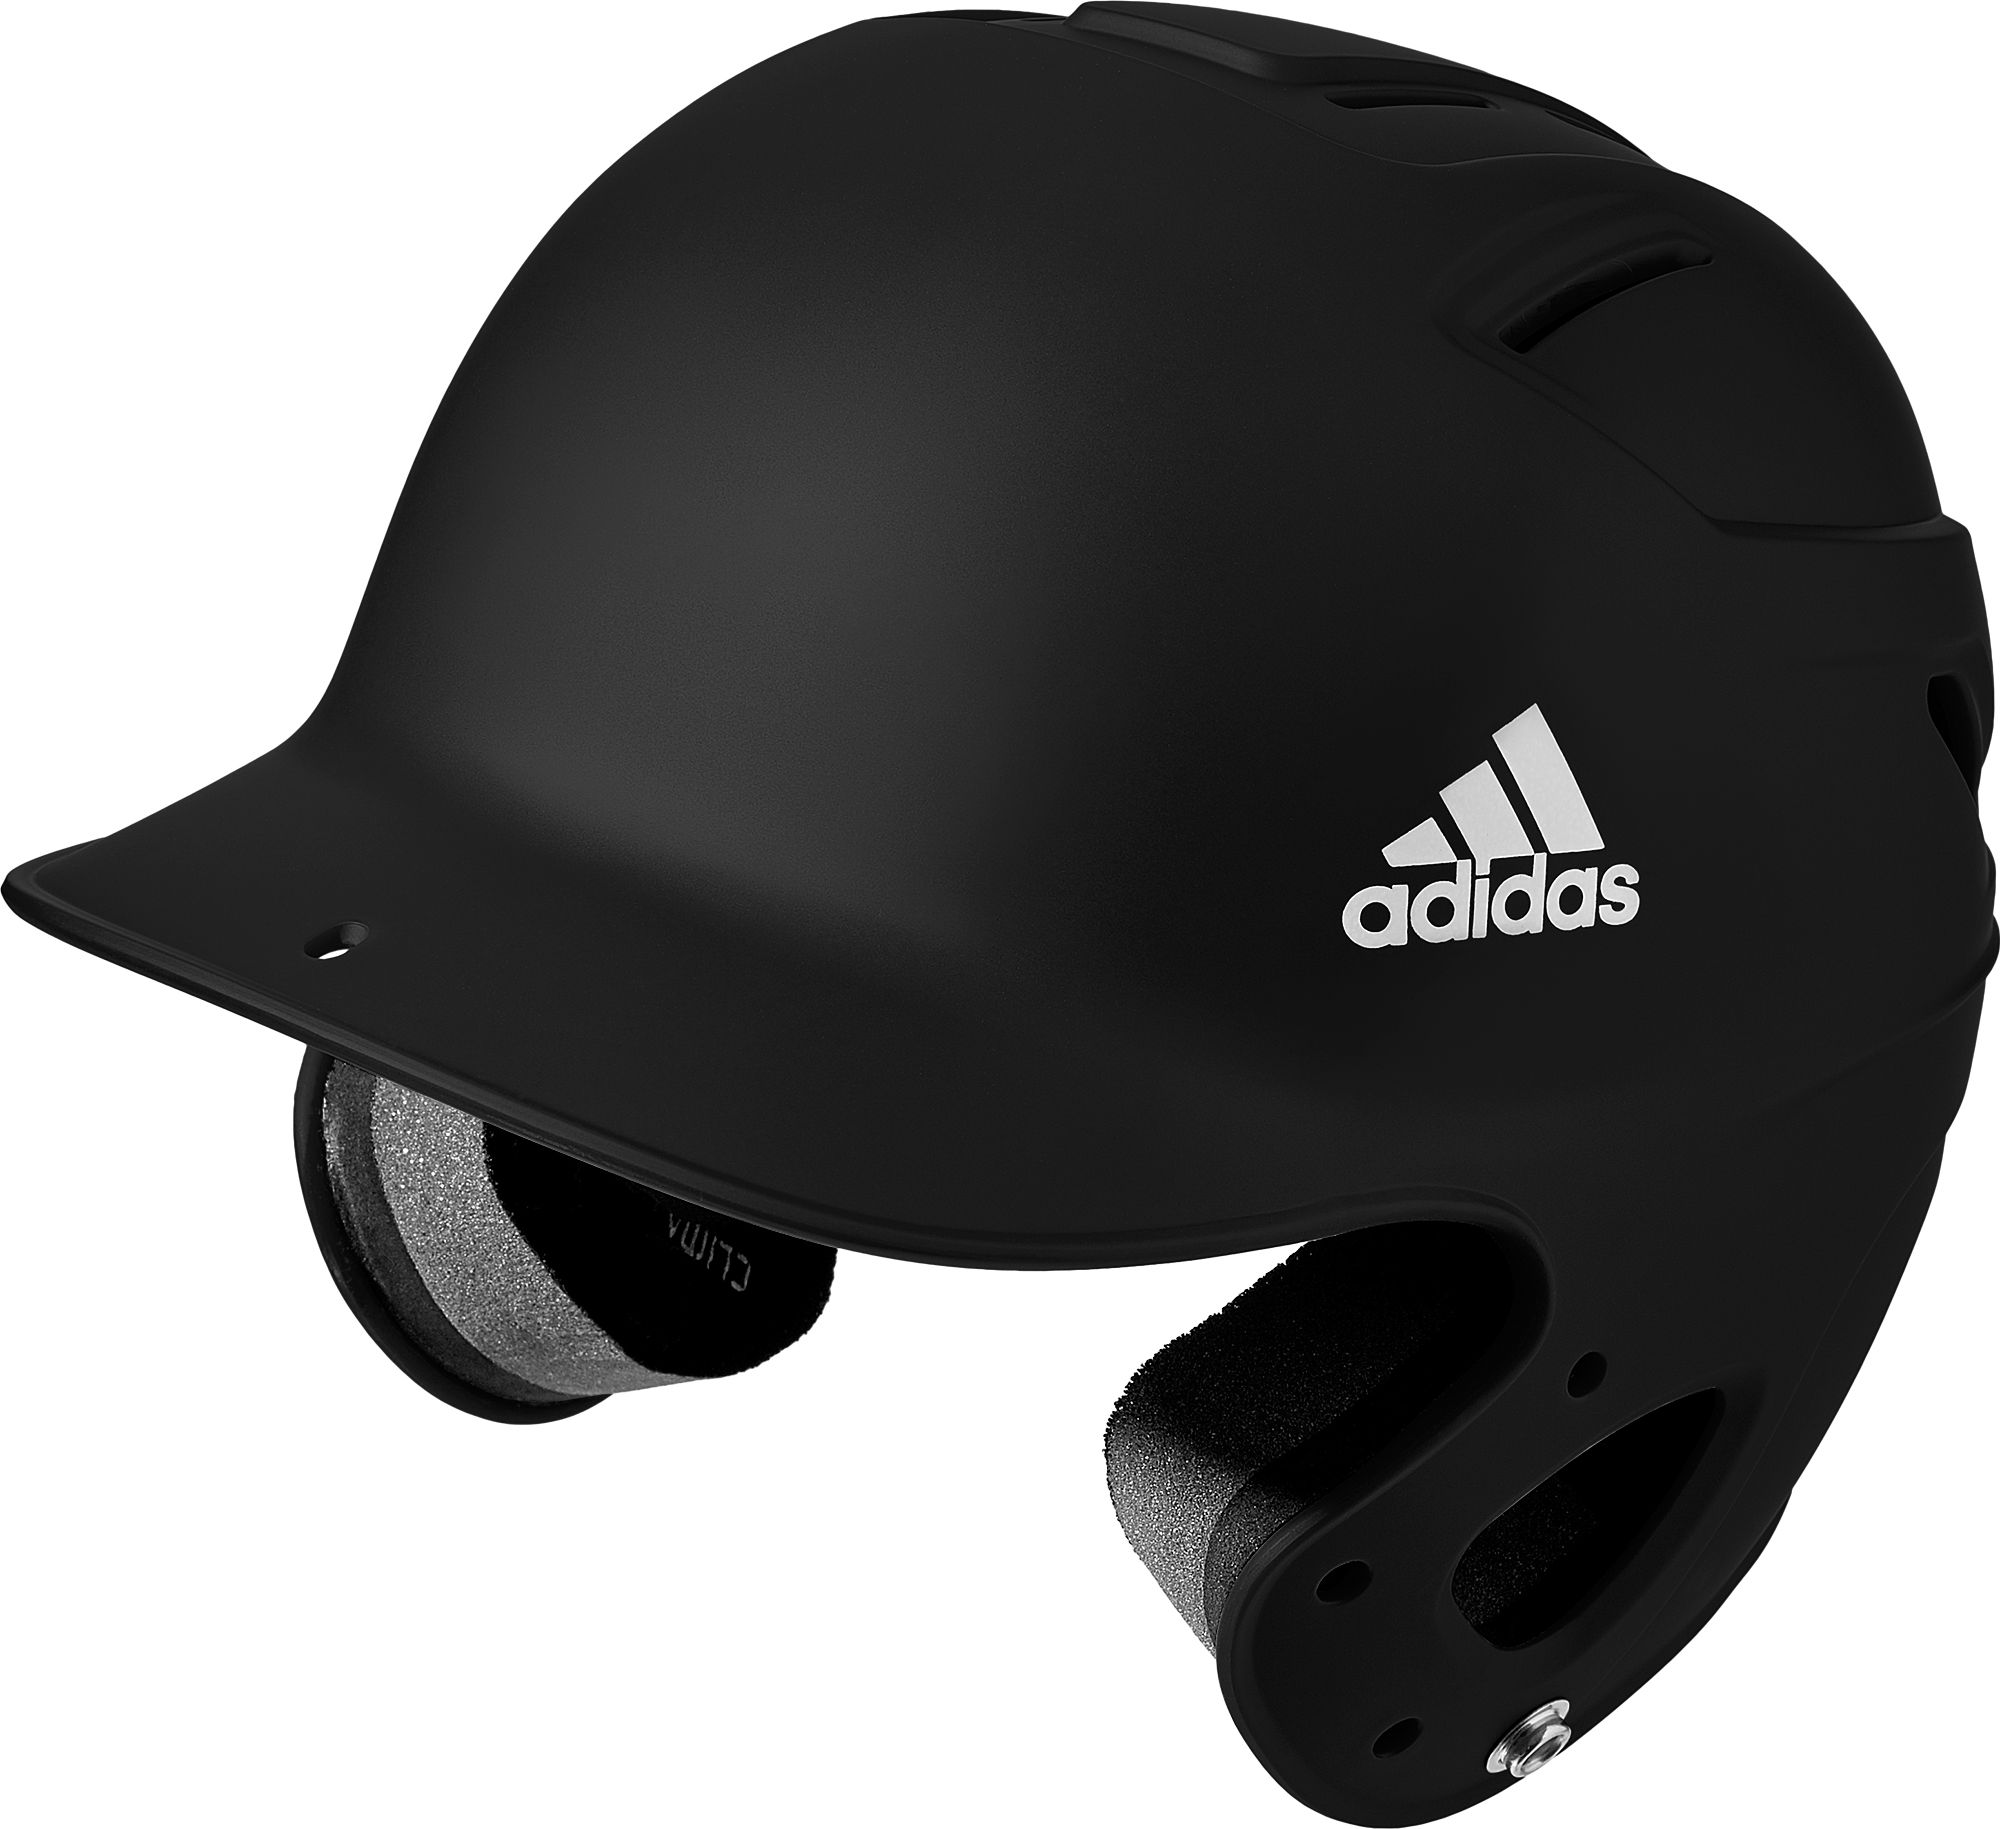 adidas batting helmet size chart